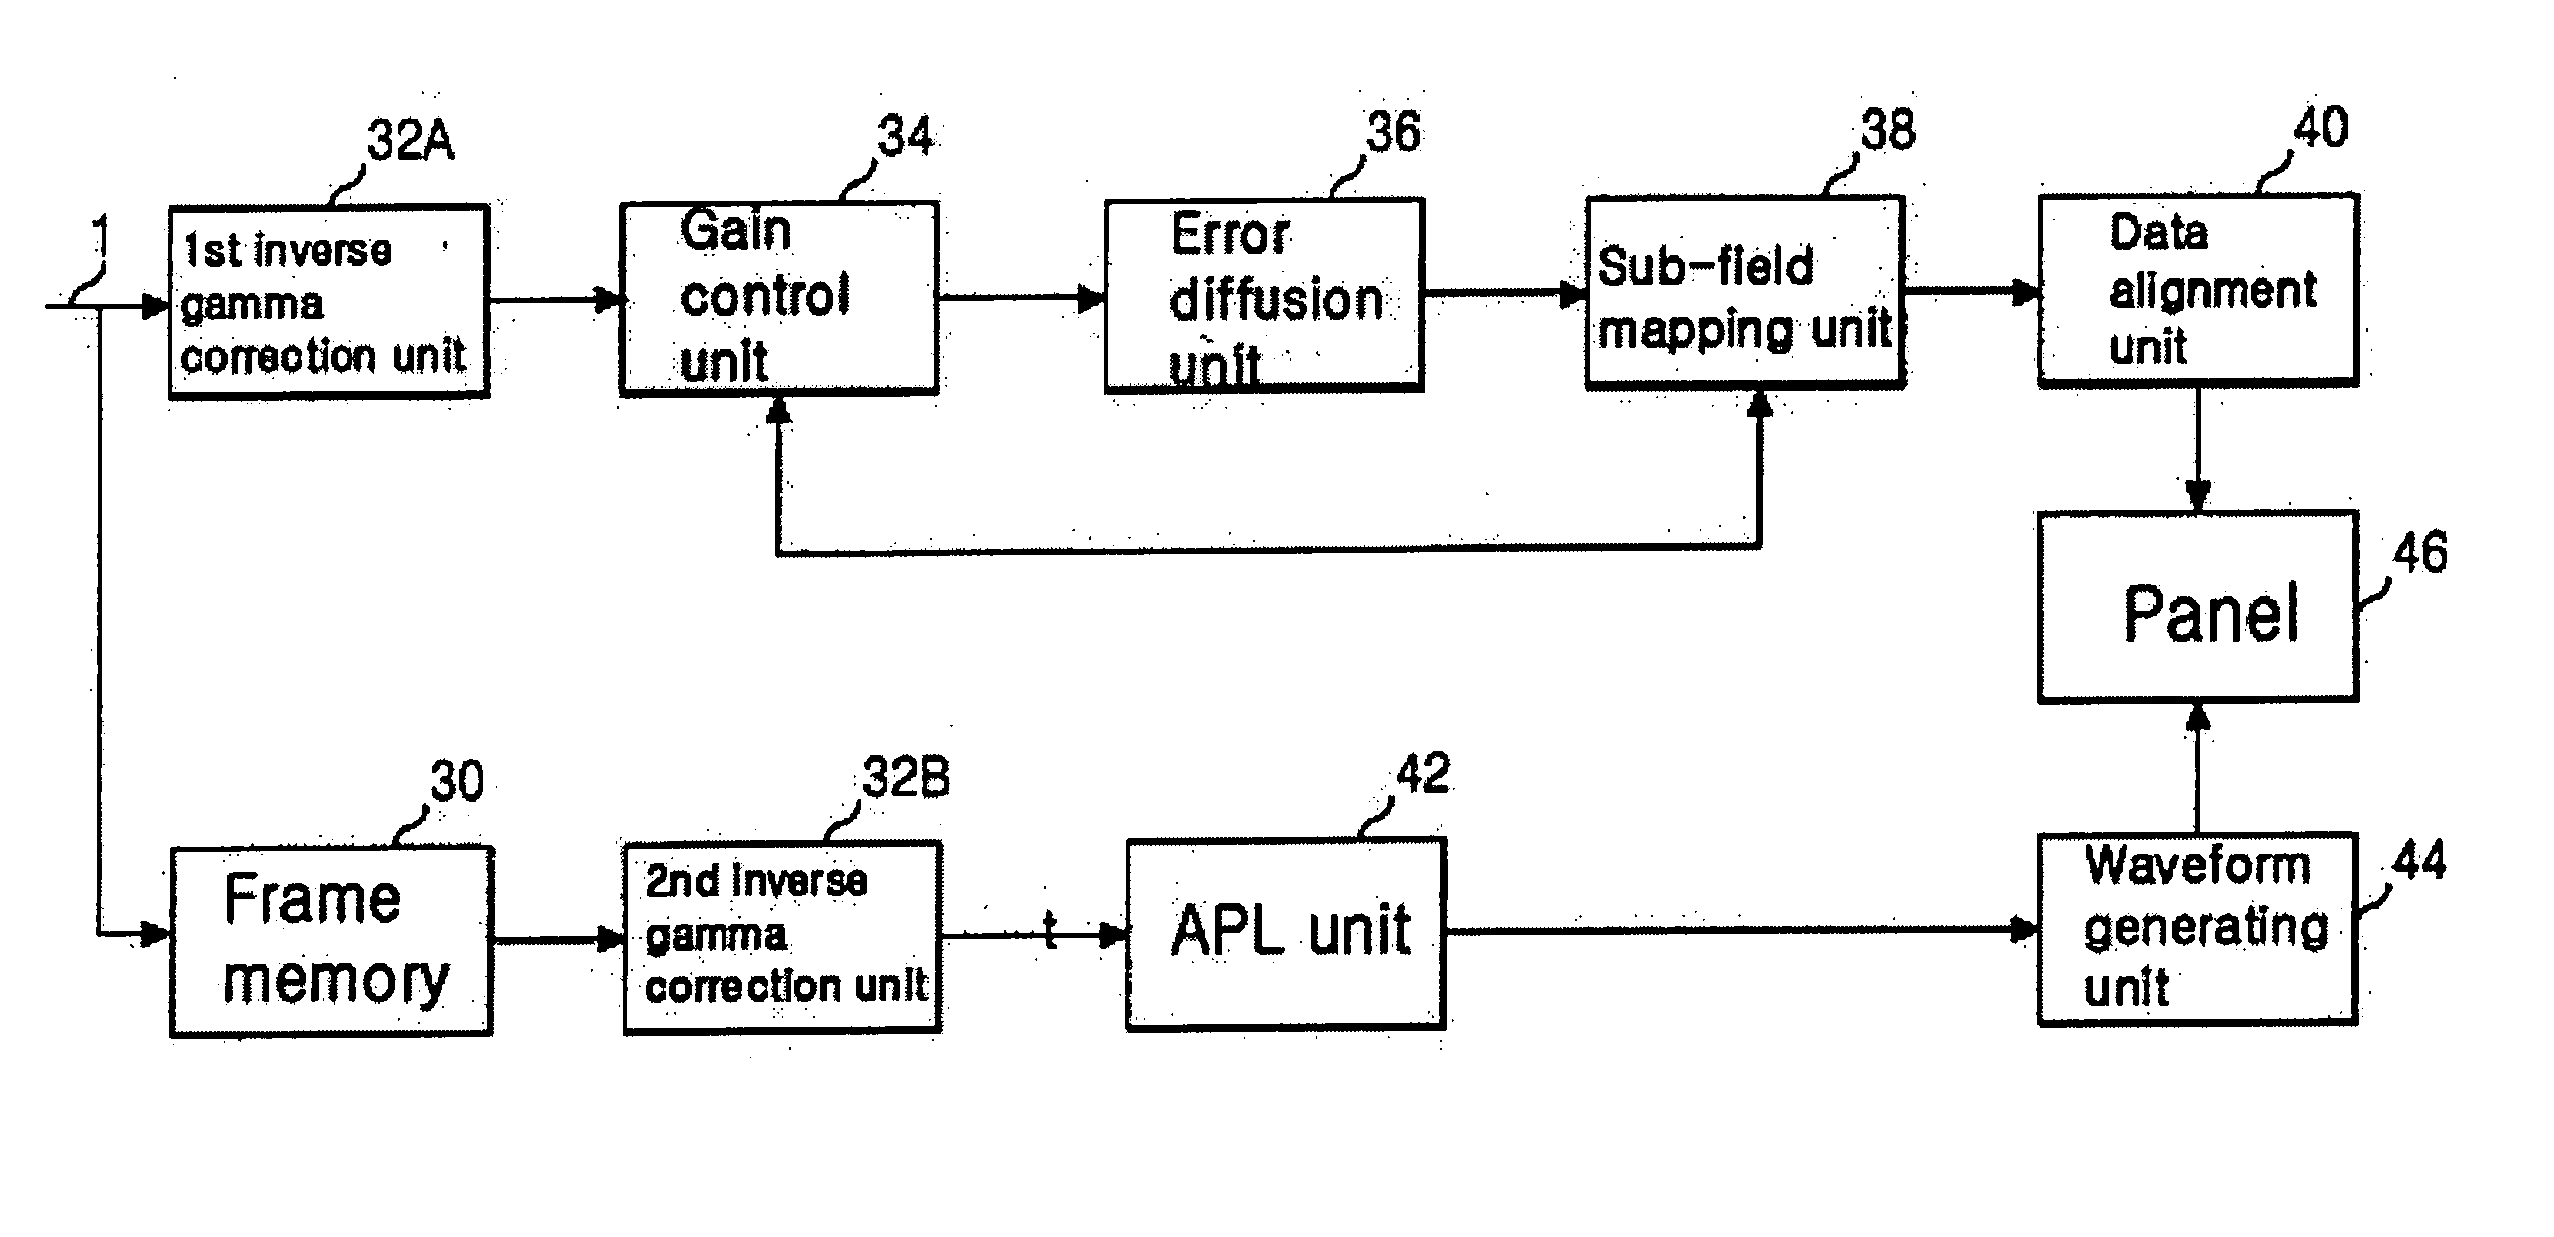 Apparatus and method of driving a plasma display panel